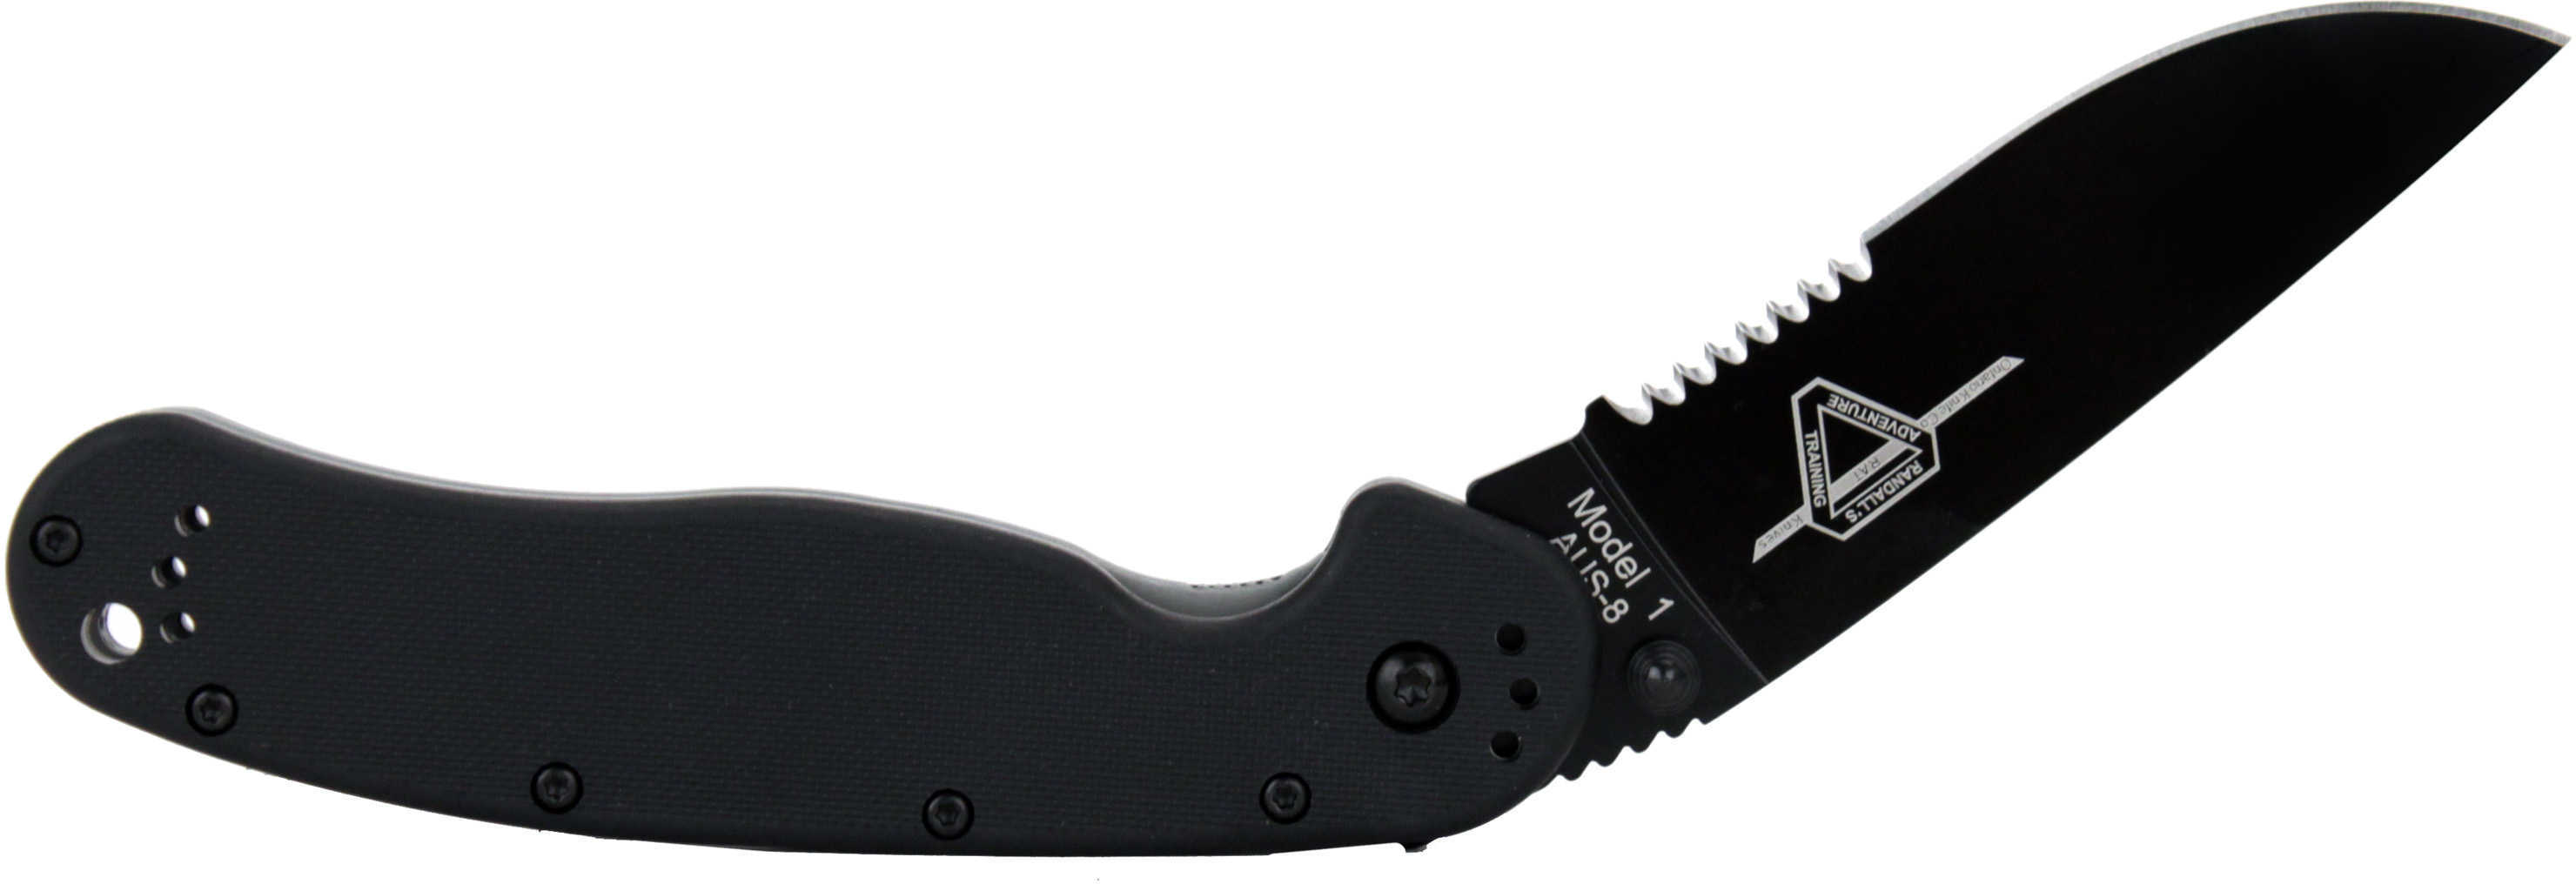 Ontario Knife Co Rat Folding Black PS